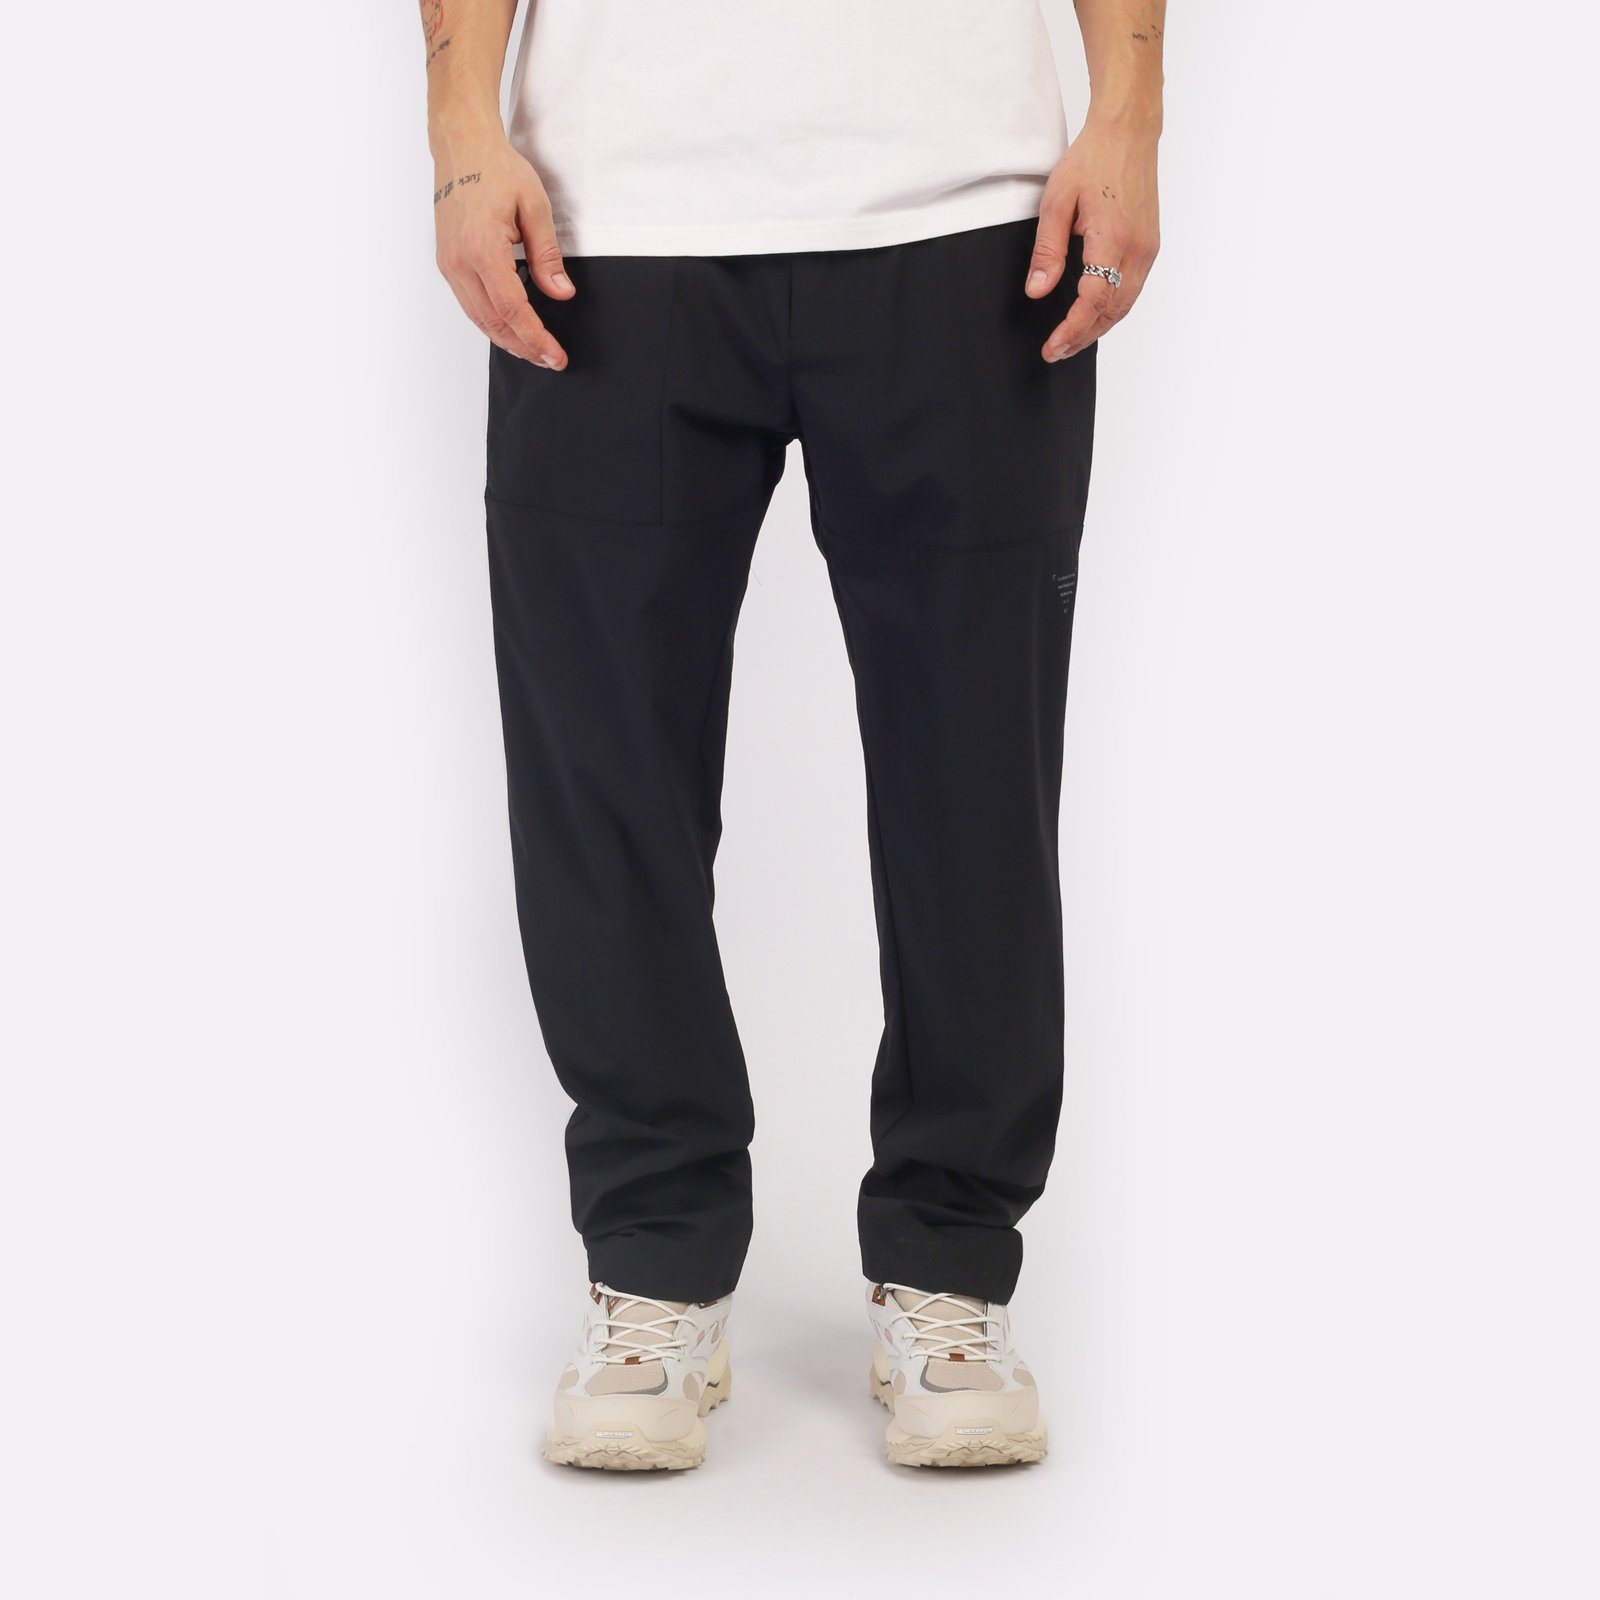 мужские брюки KRAKATAU Rm180-1  (Rm180-1-чёрный)  - цена, описание, фото 1